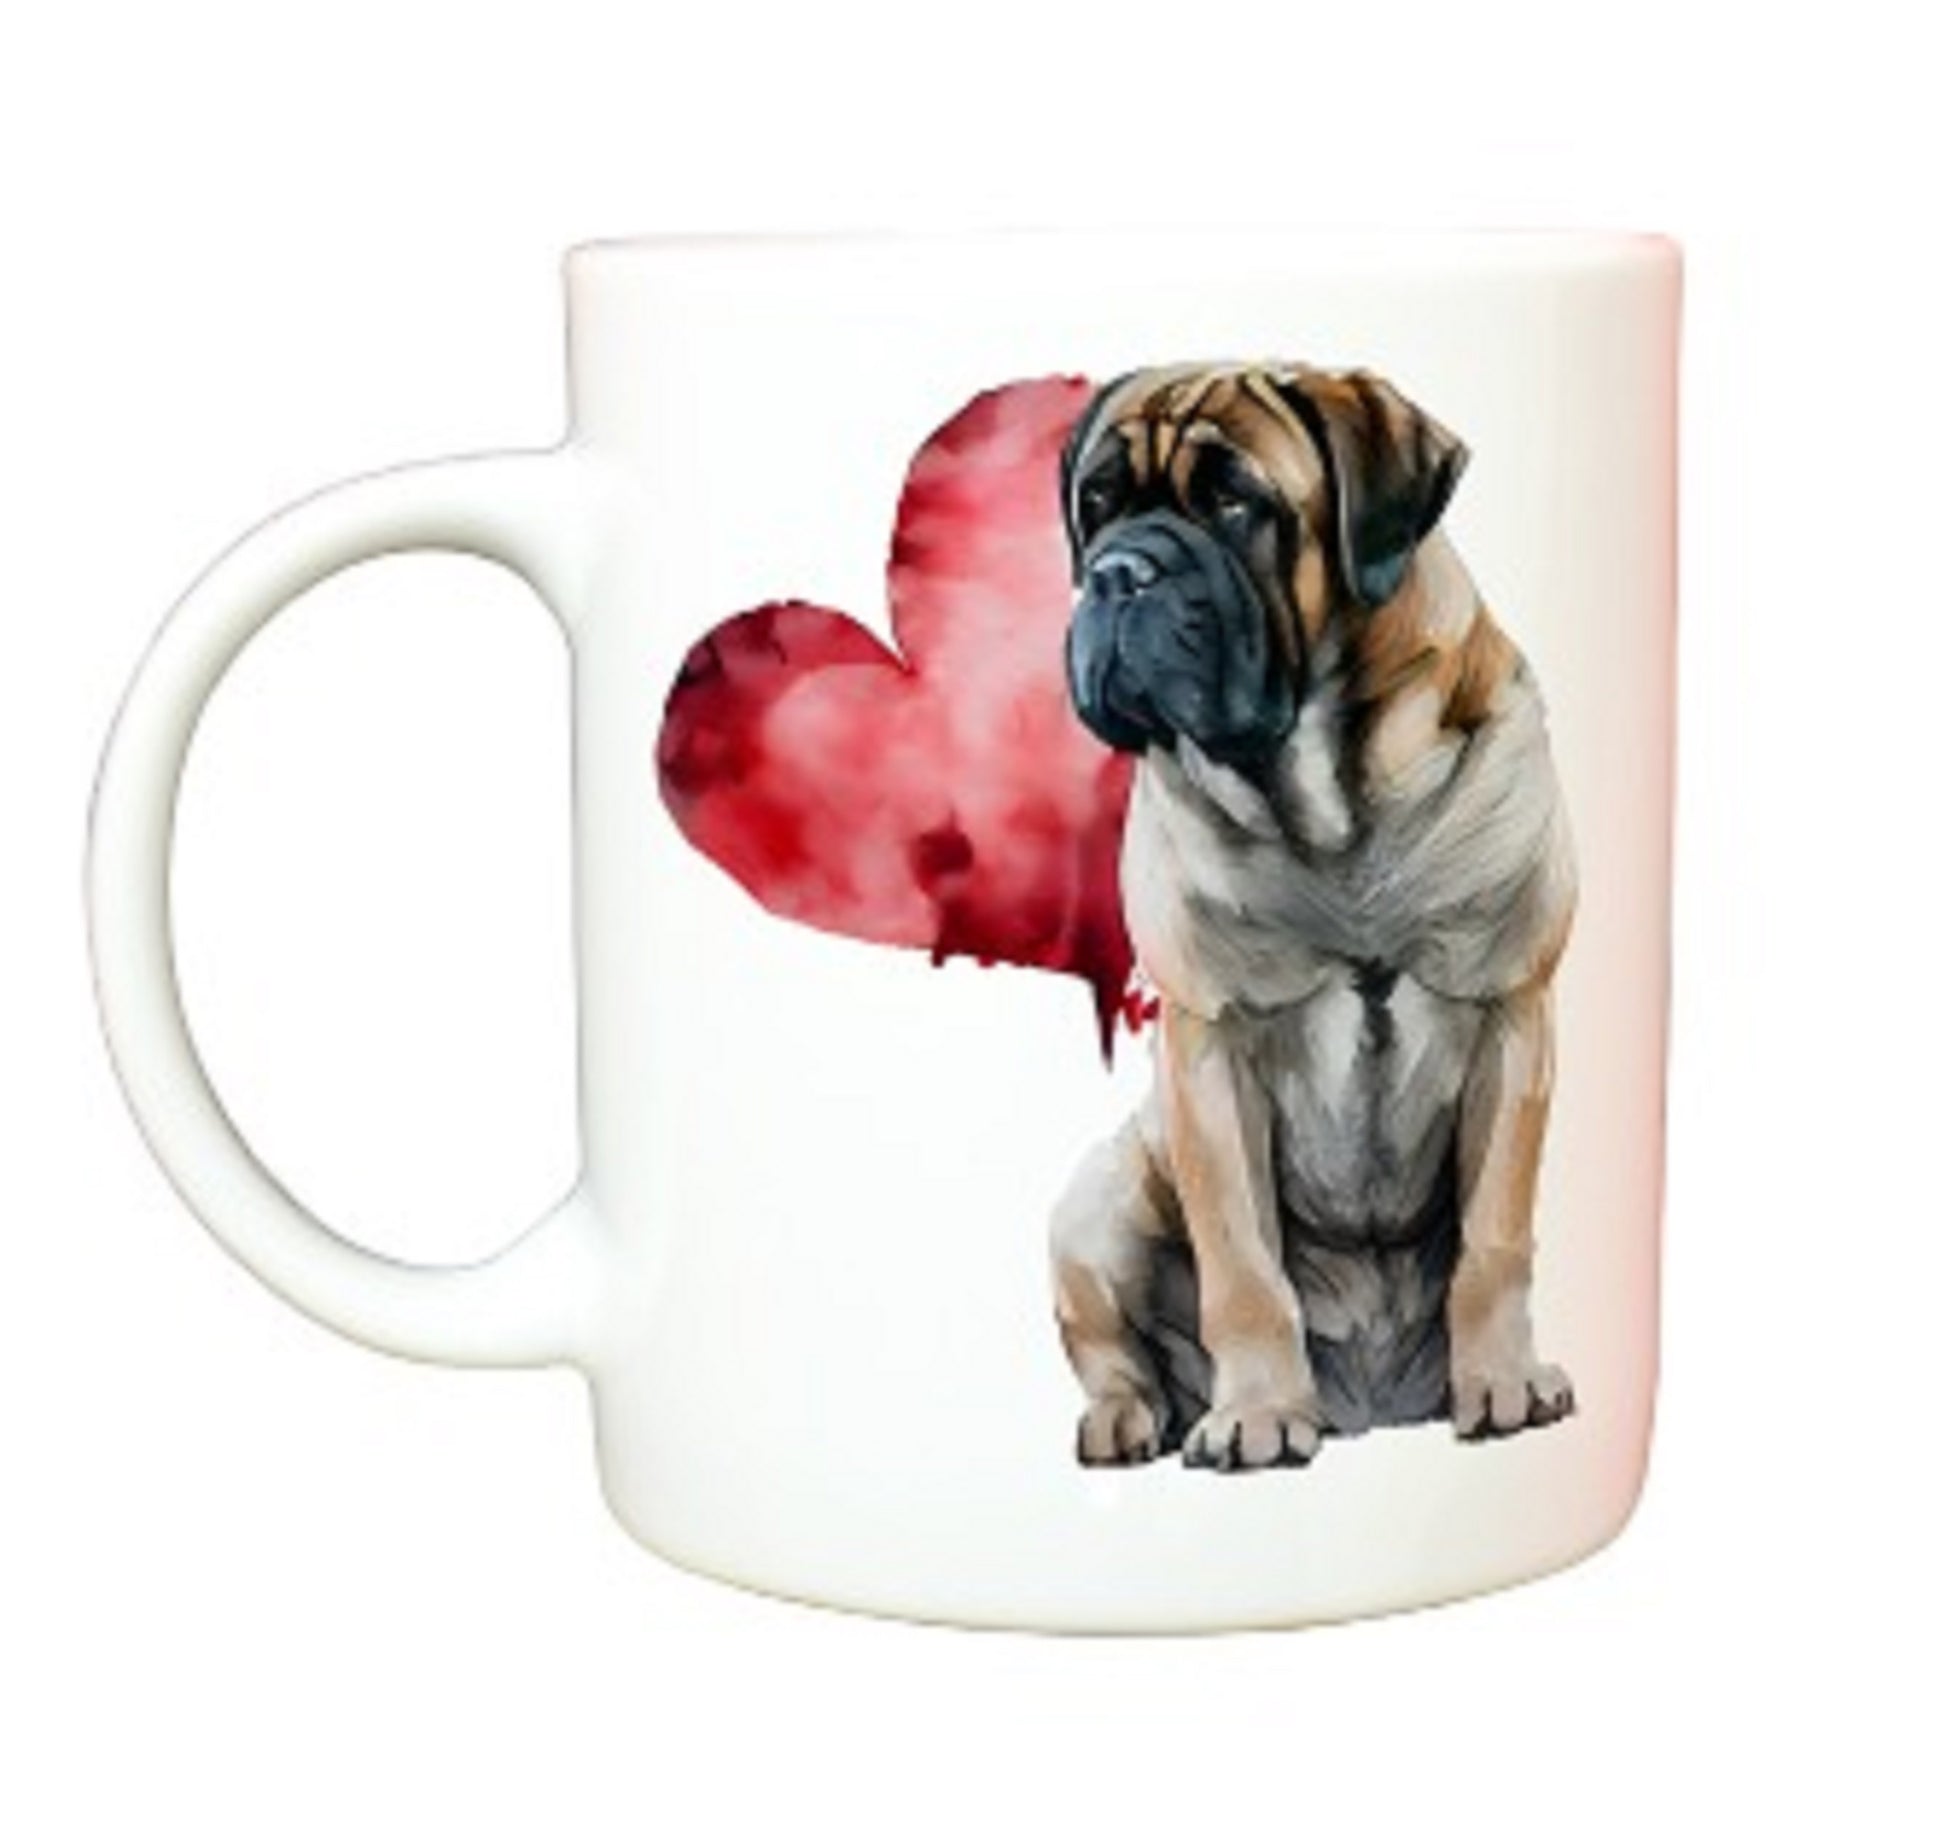  Bull Mastiff Dog and Heart Mug by Free Spirit Accessories sold by Free Spirit Accessories